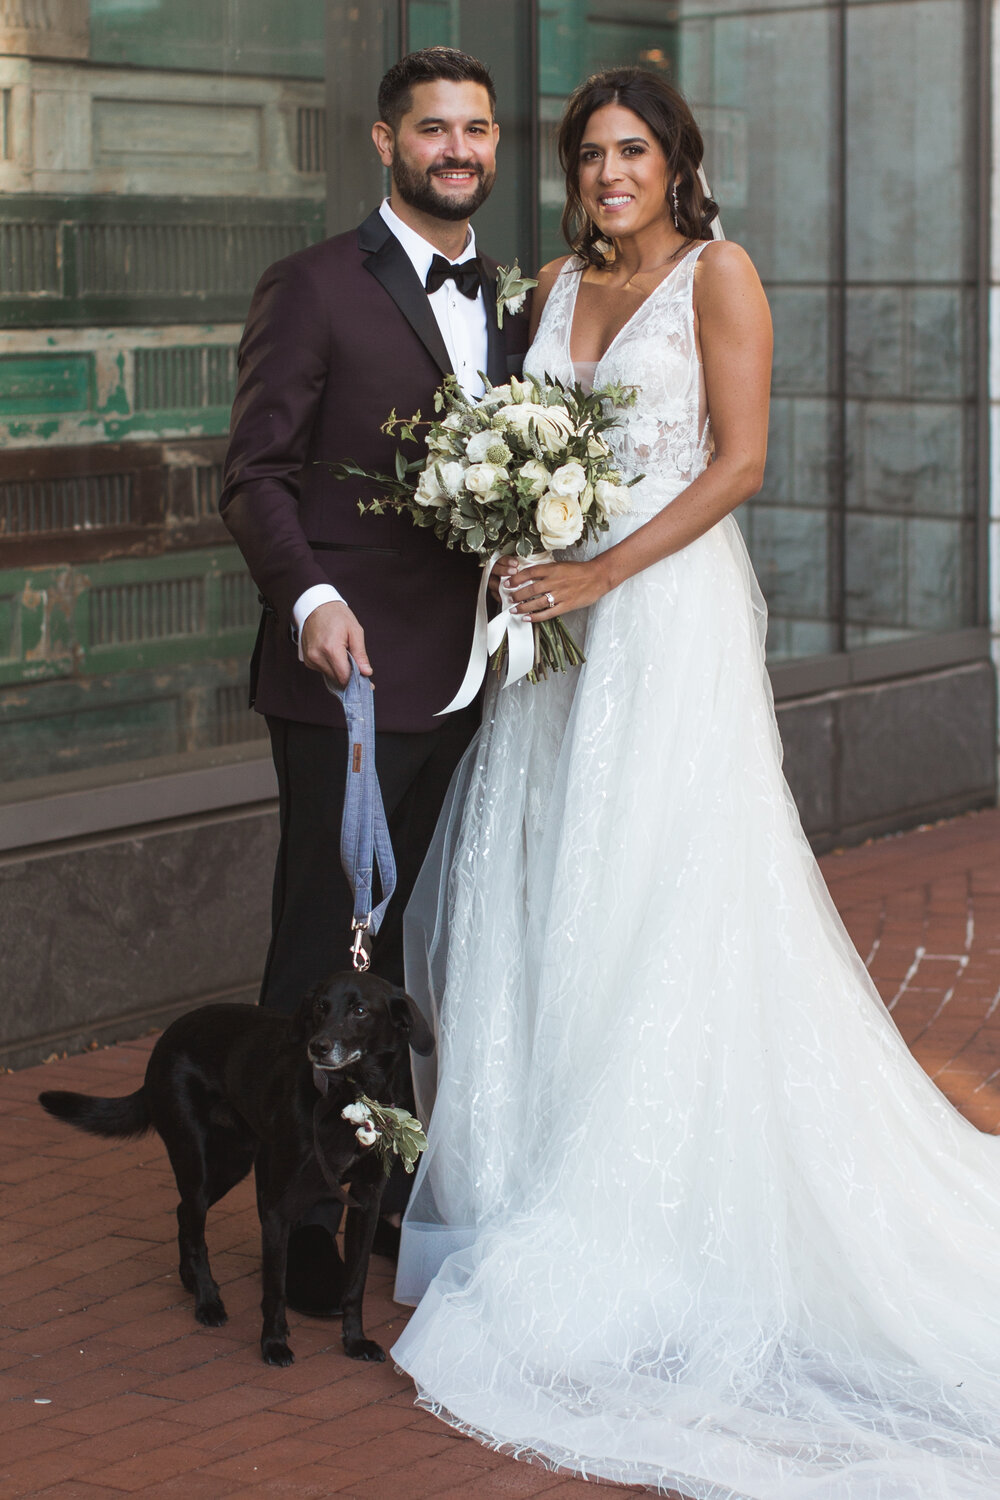 Jessica + John | A Winter Wedding | The Belvedere Hotel in Baltimore, MD